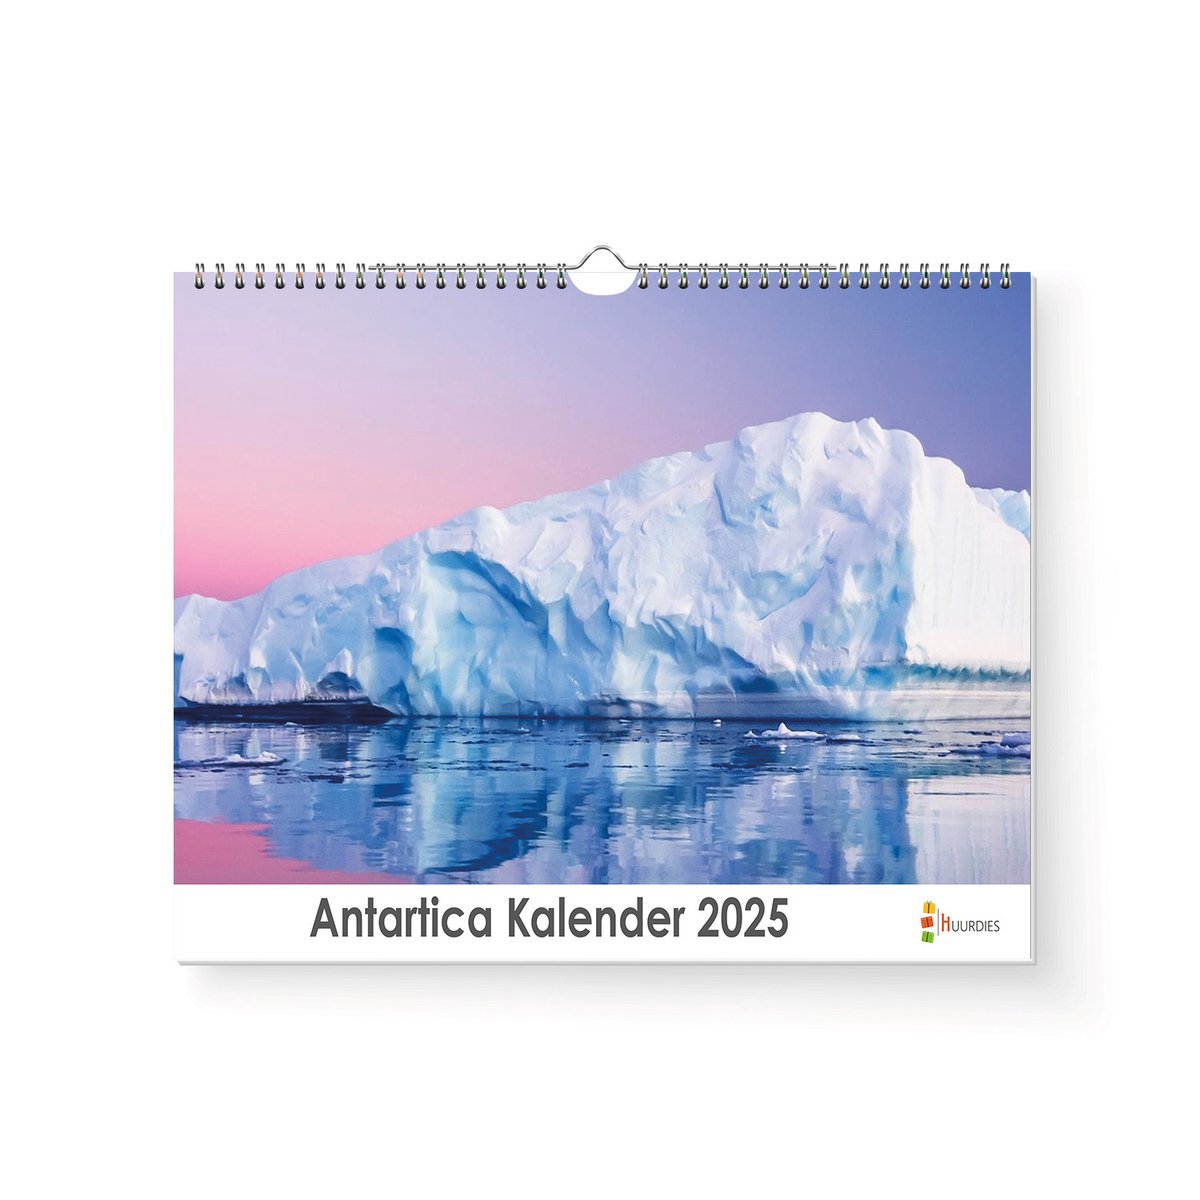 Antartica Kalender - Jaarkalender 2025 - A4 kalender - 29.7x21cm - 300 gramsgewicht glimmend papier - Spiraalgebonden - Ophanghaakje